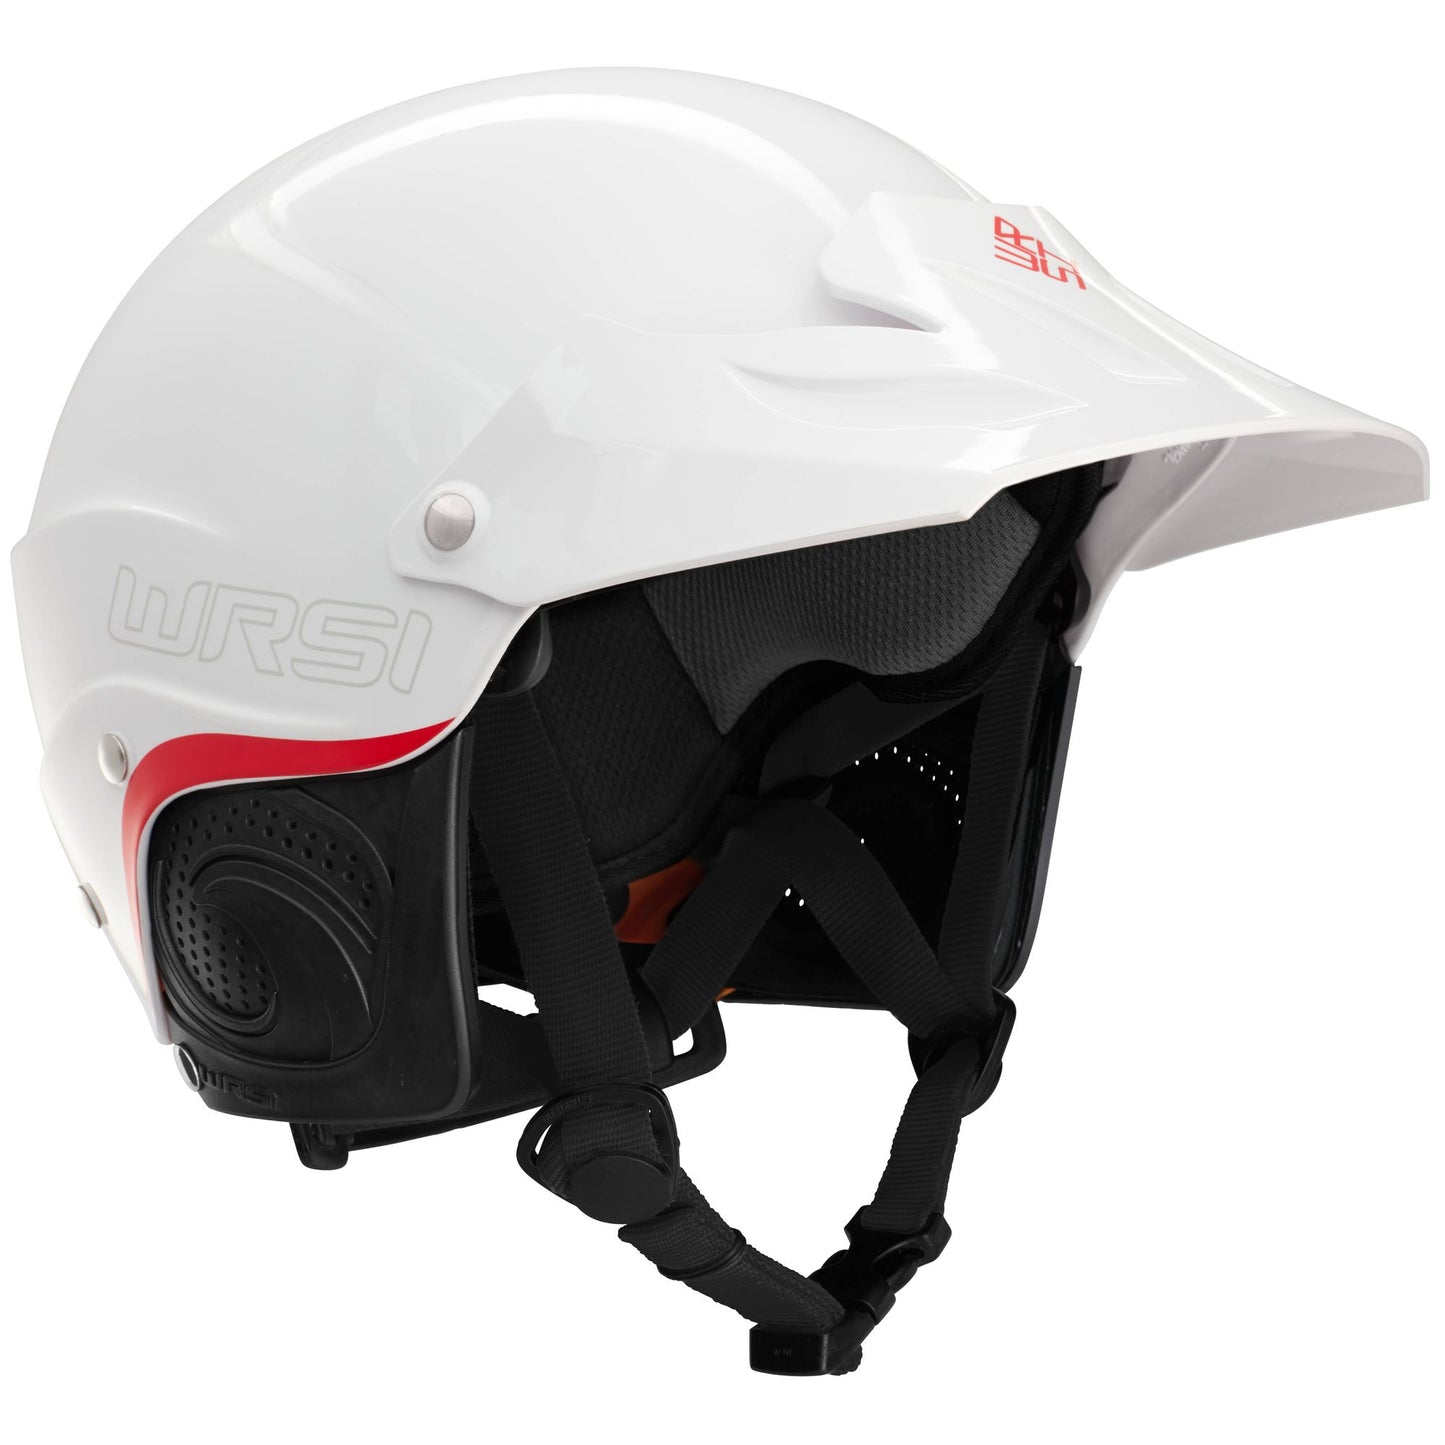 Current Pro Helmet